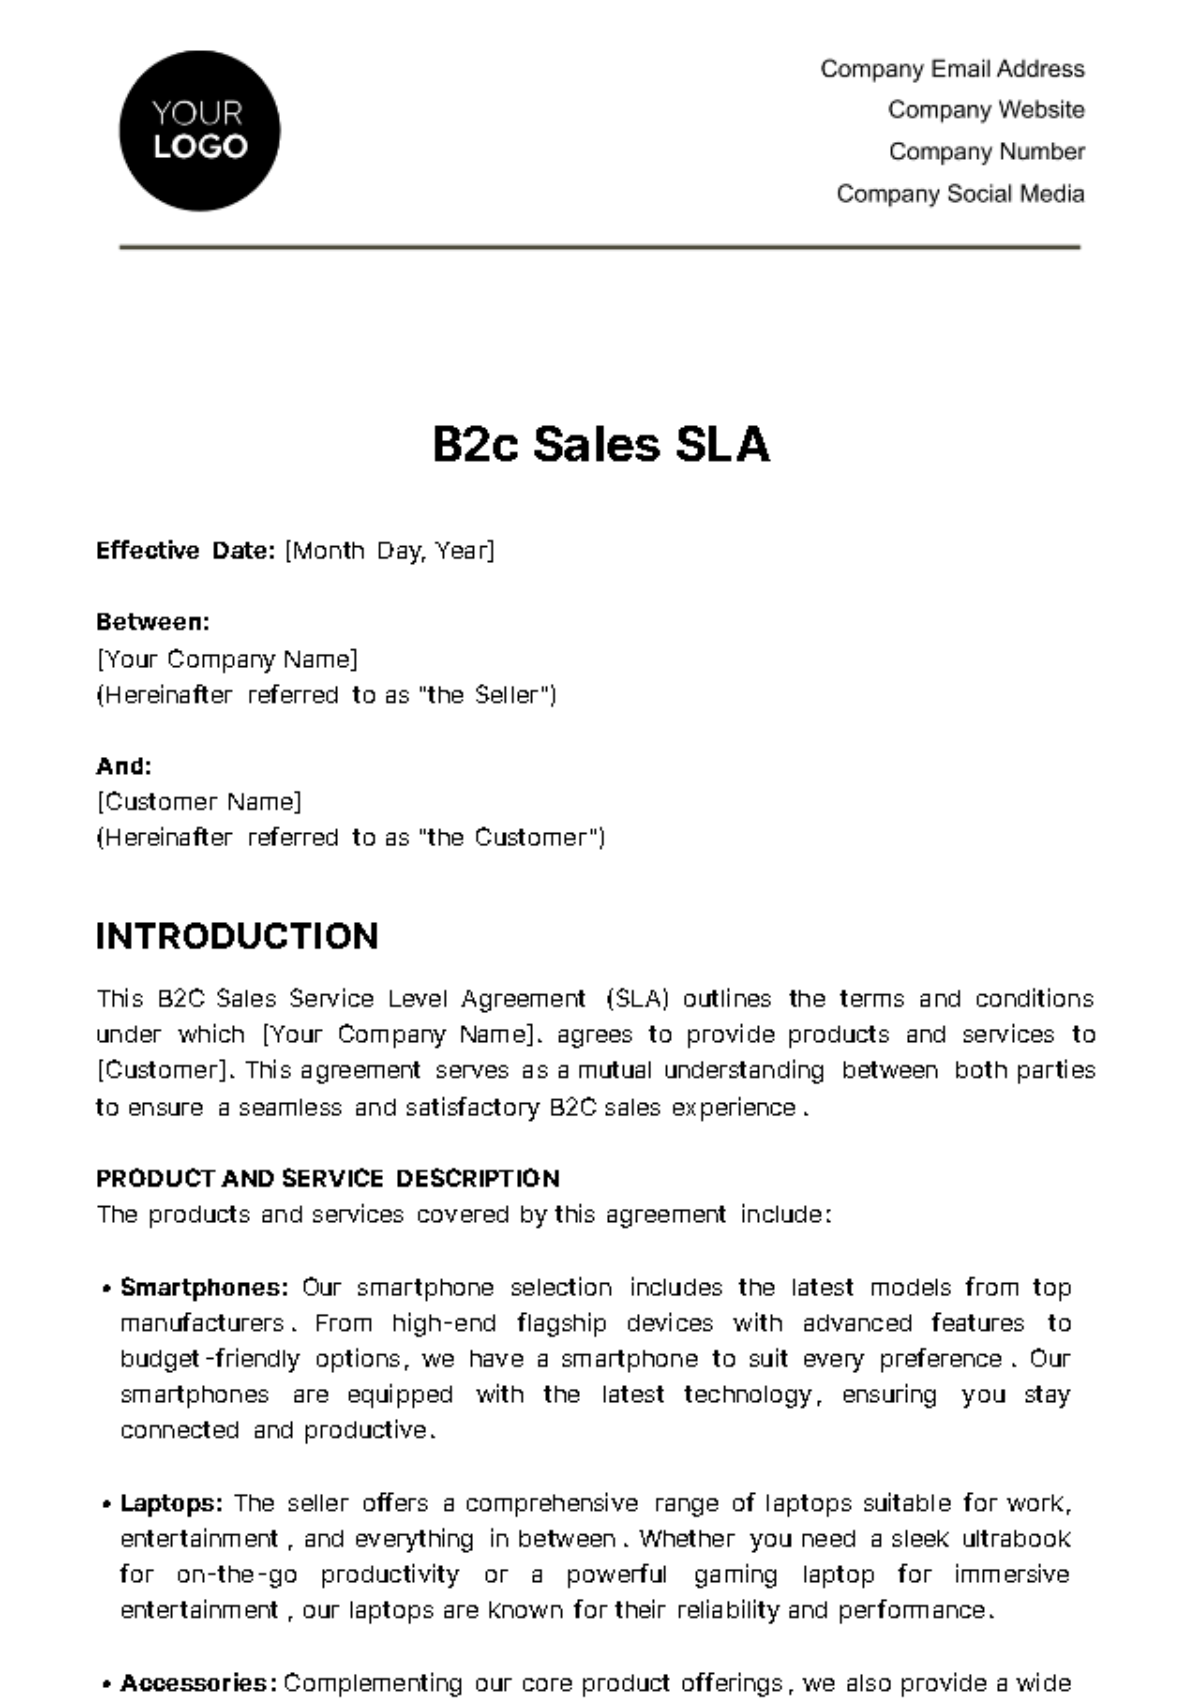 B2C Sales SLA Template